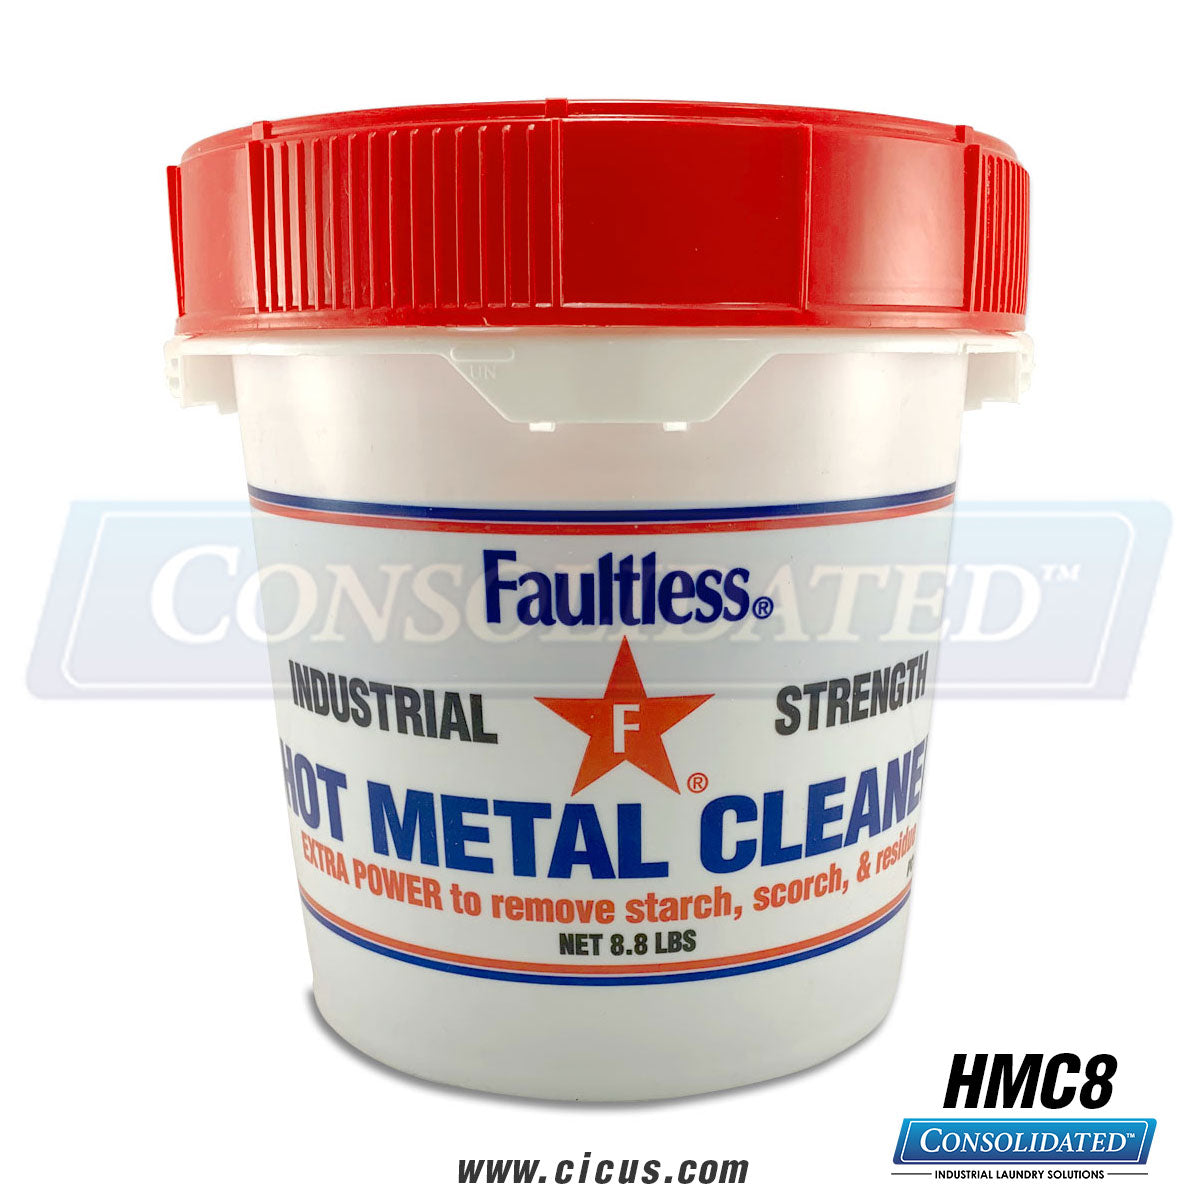 Faultless #8 Hot Metal Cleaner - 8.8 lb. Pail [HMC8